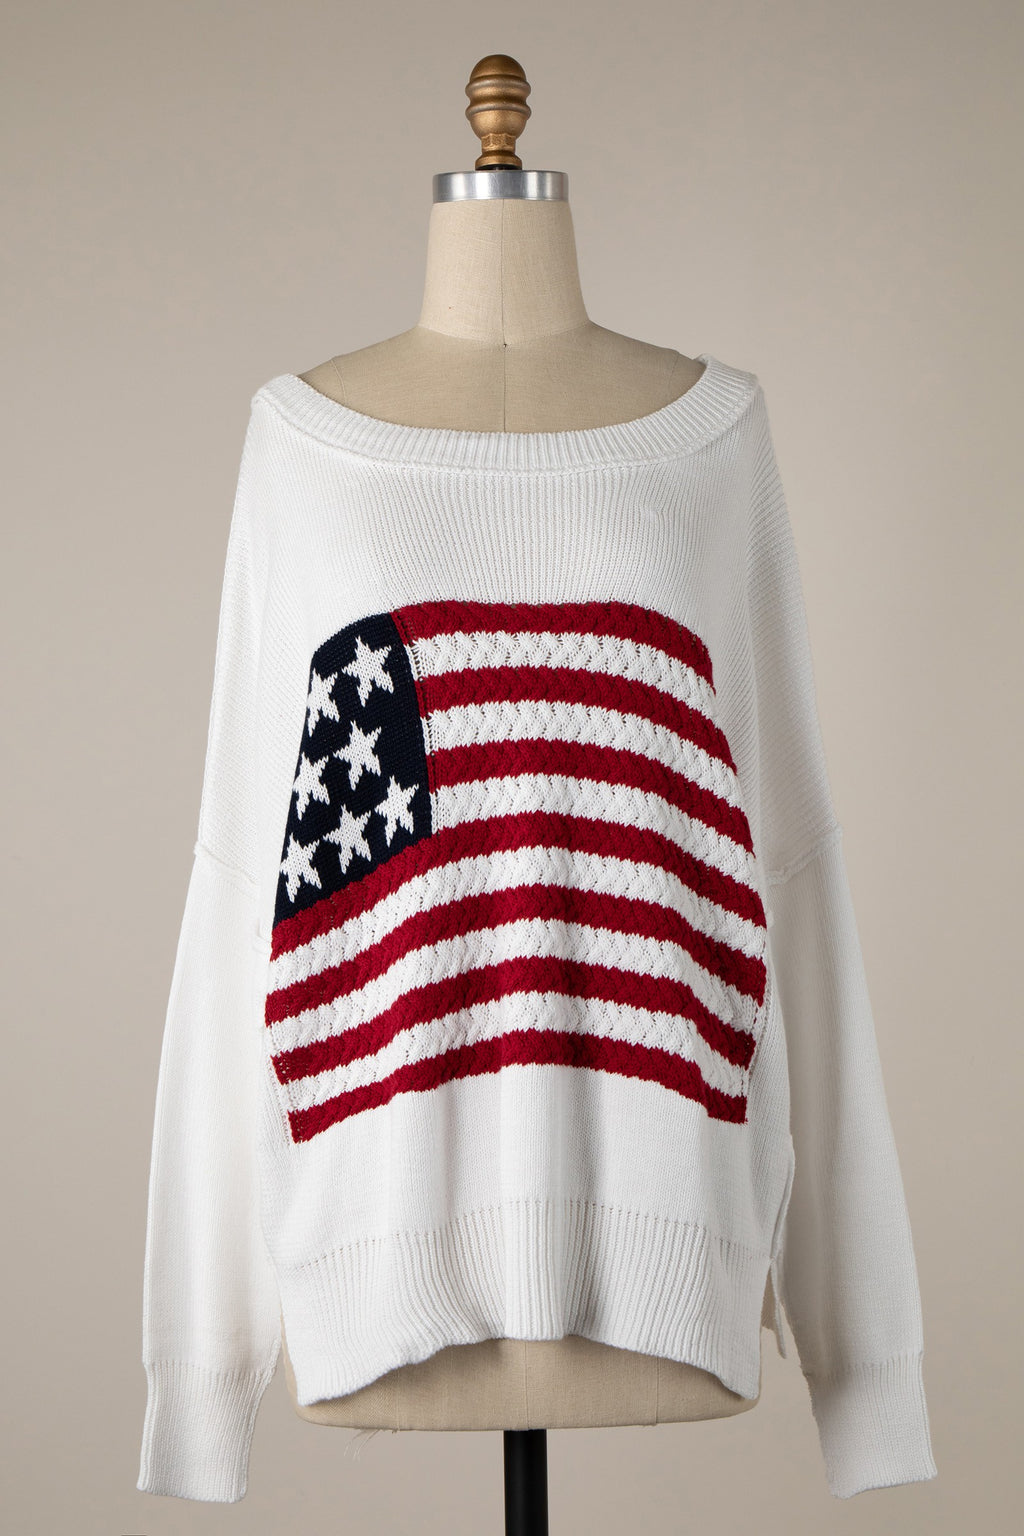 America the Beautiful Sweater